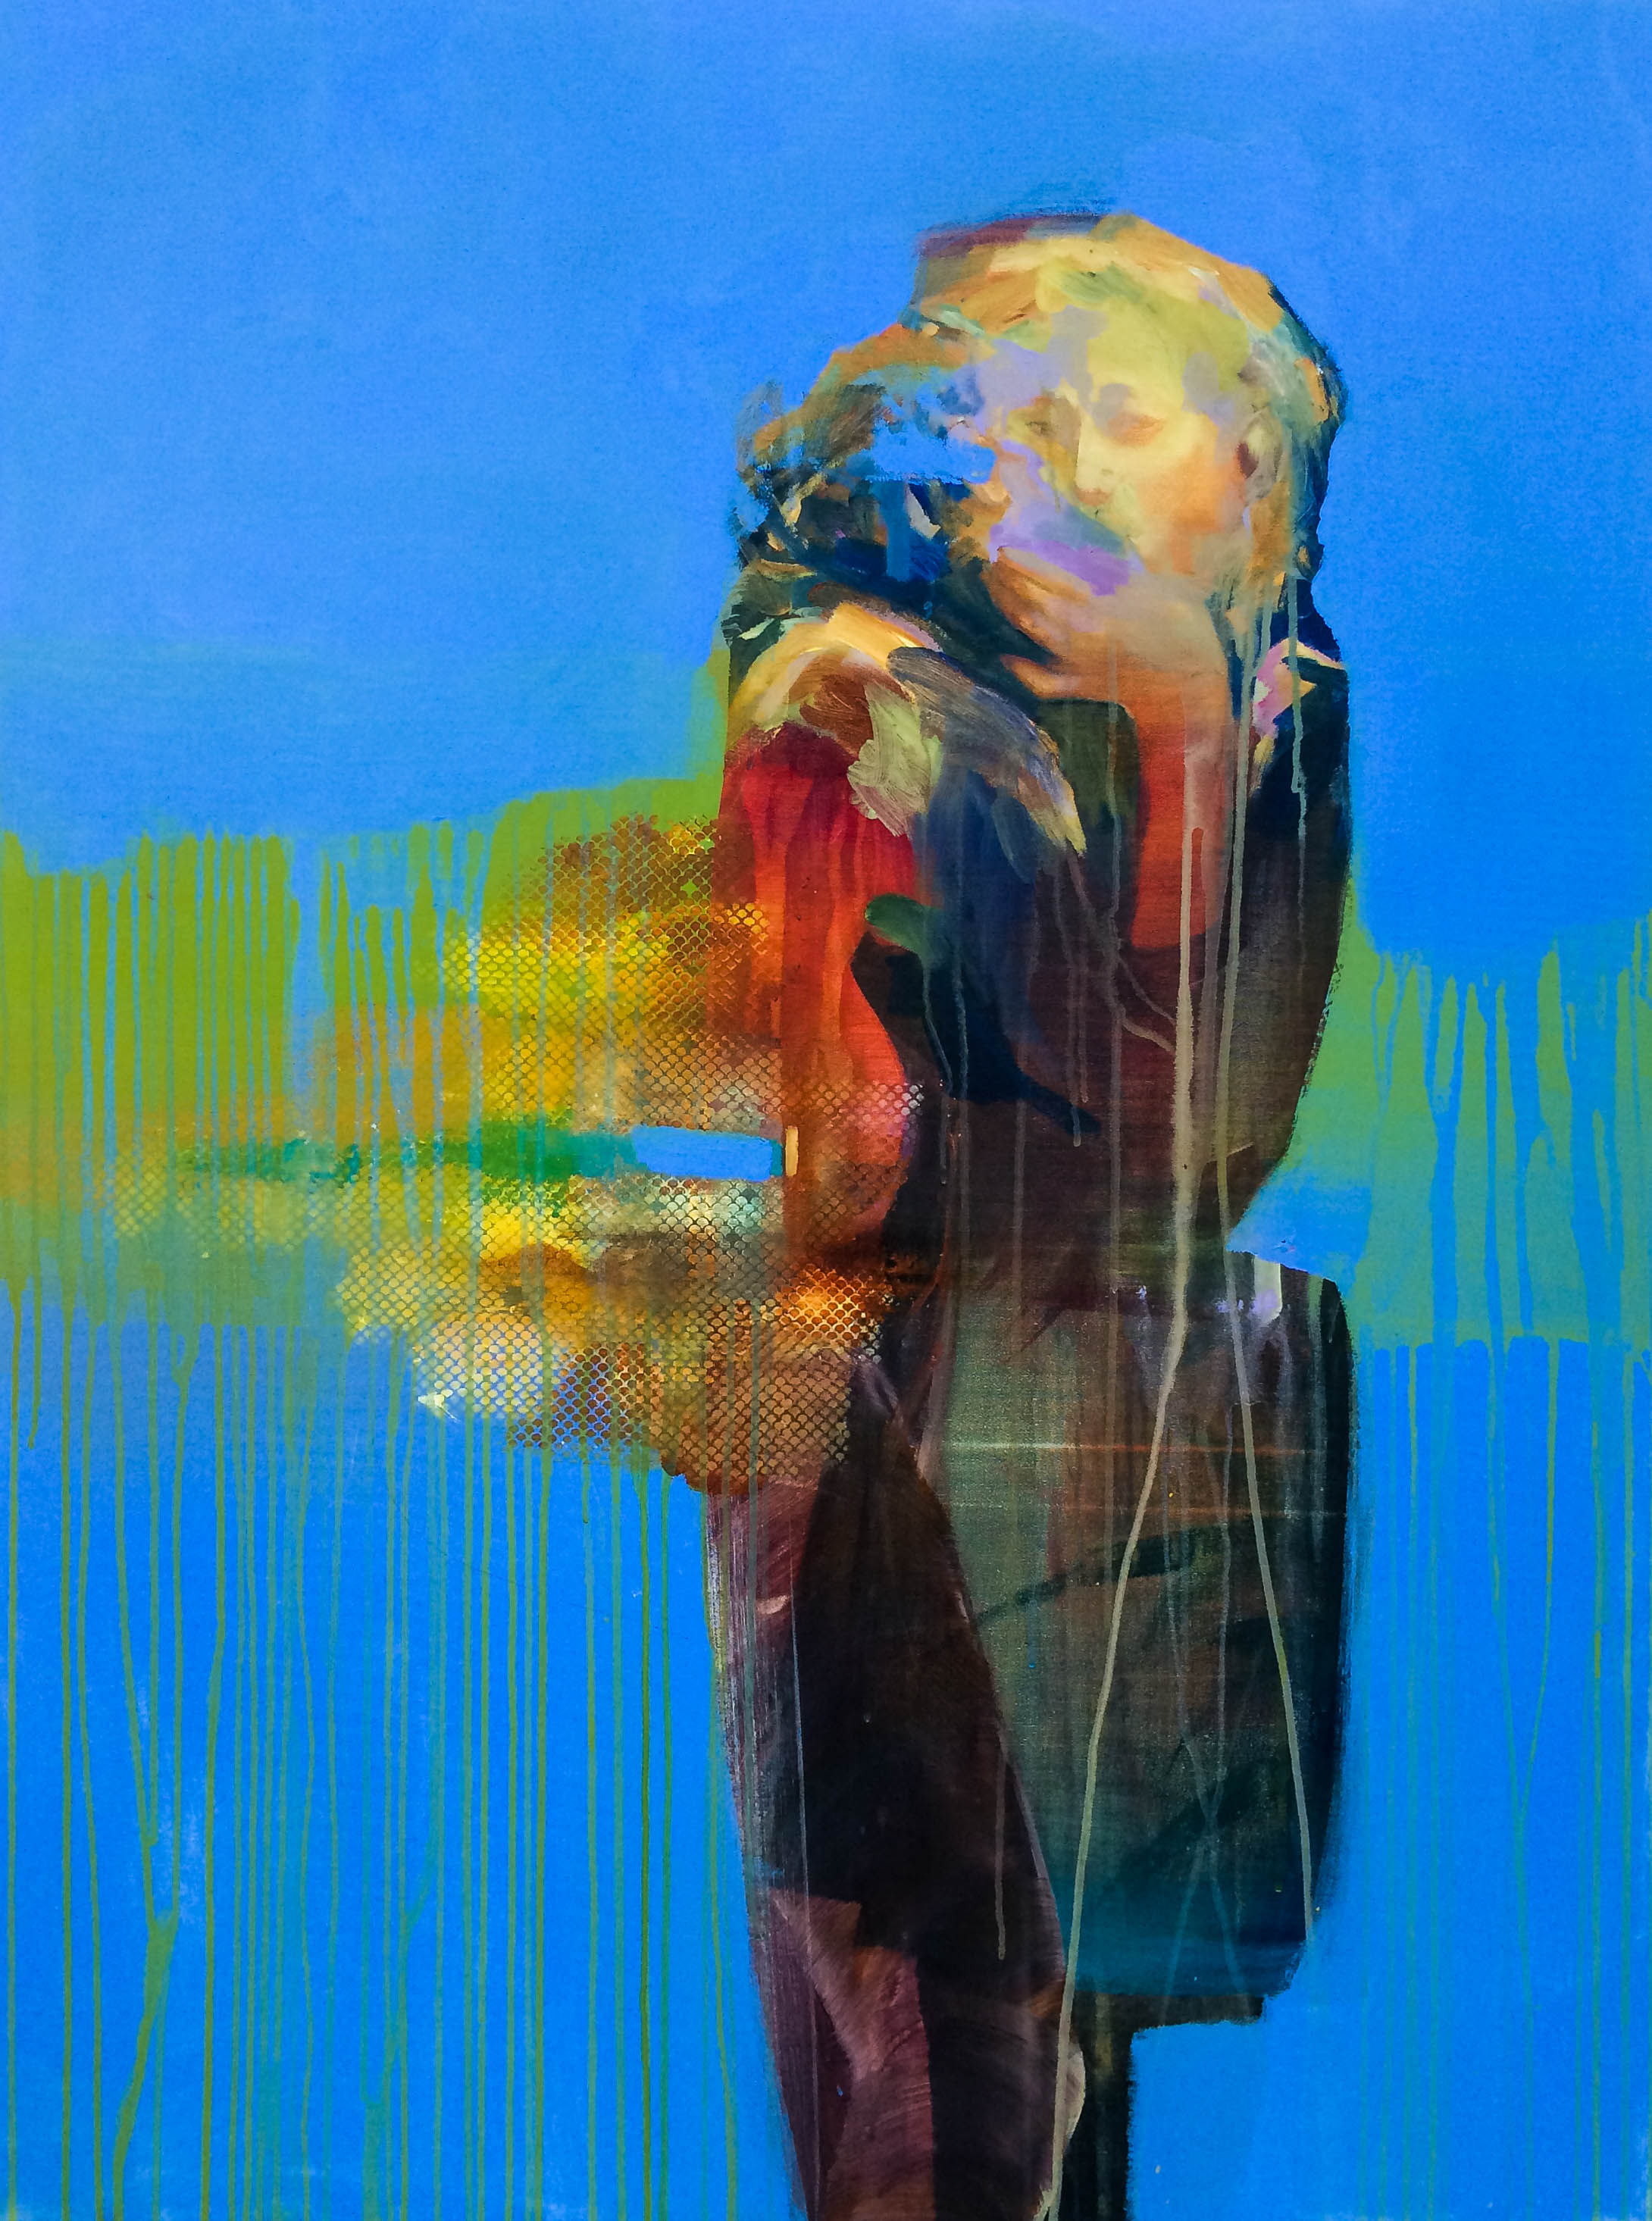   Blue Crush / Yellow Fever     awake   2016 48"x36" Acrylic on canvas 